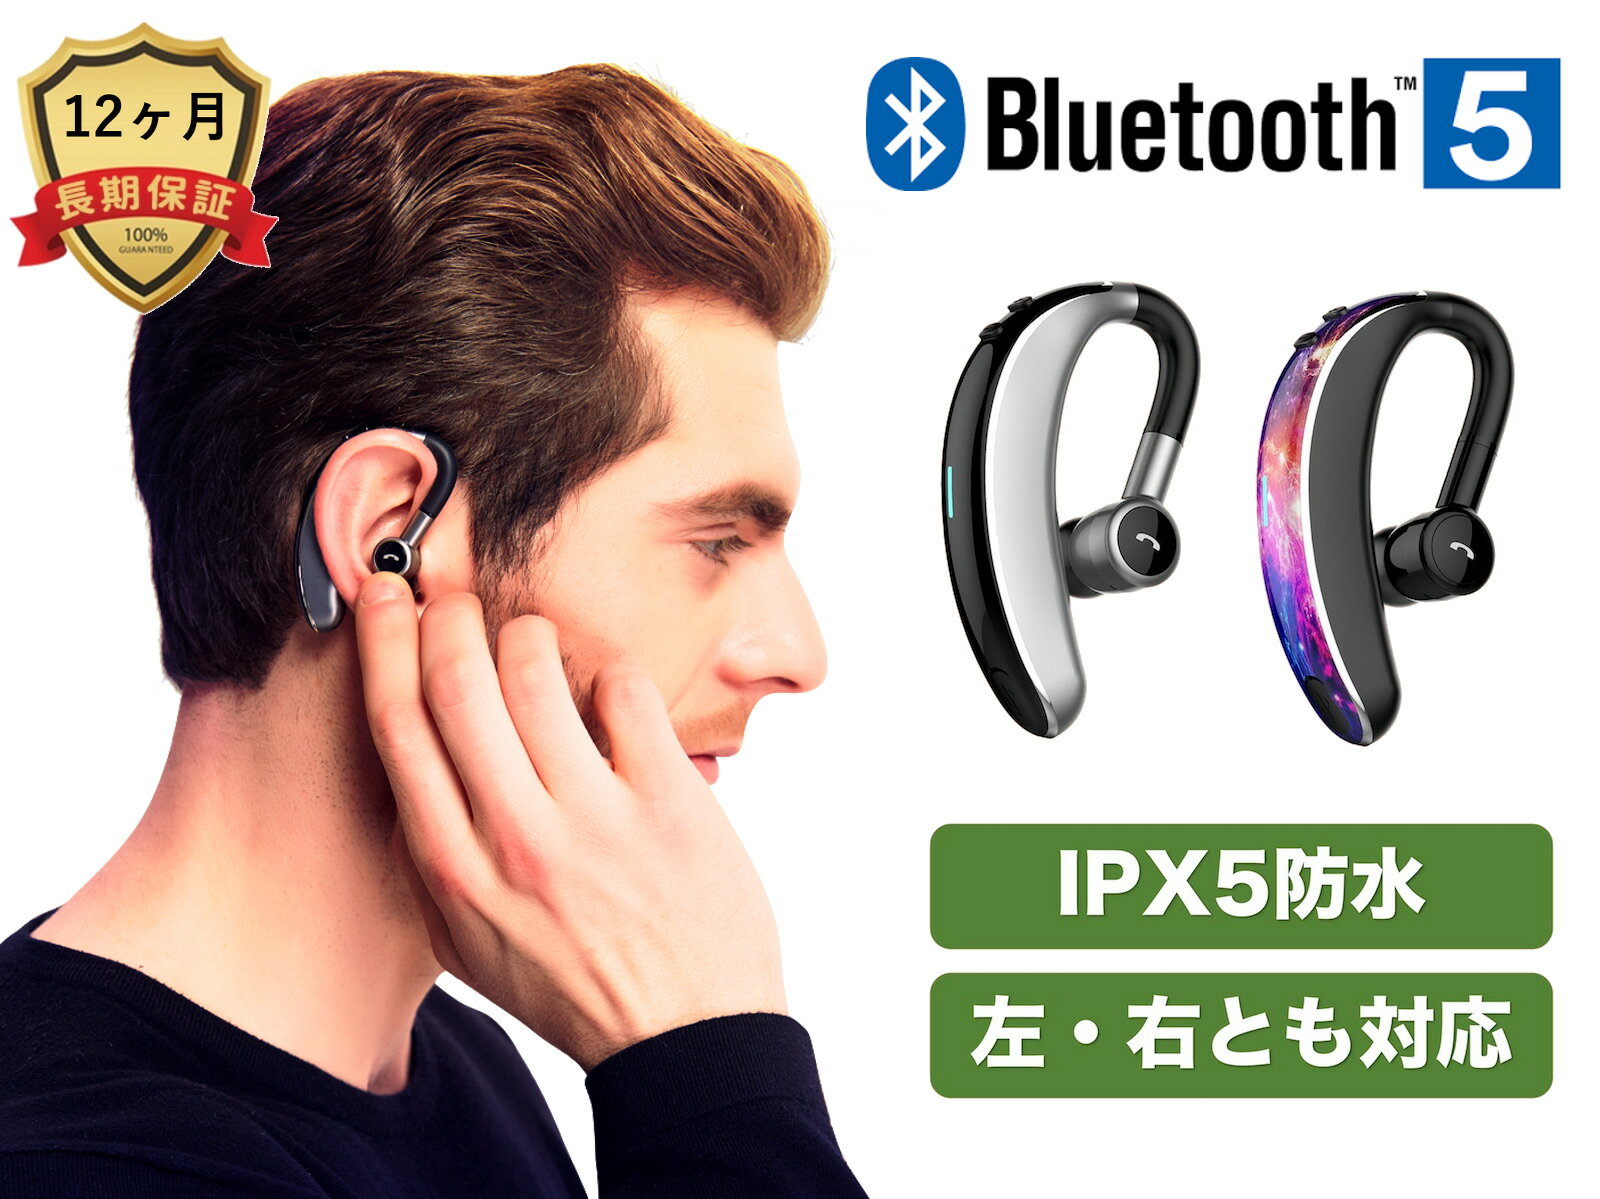 【Bluetooth 5.0】IPX5防水 ワイヤレスイ